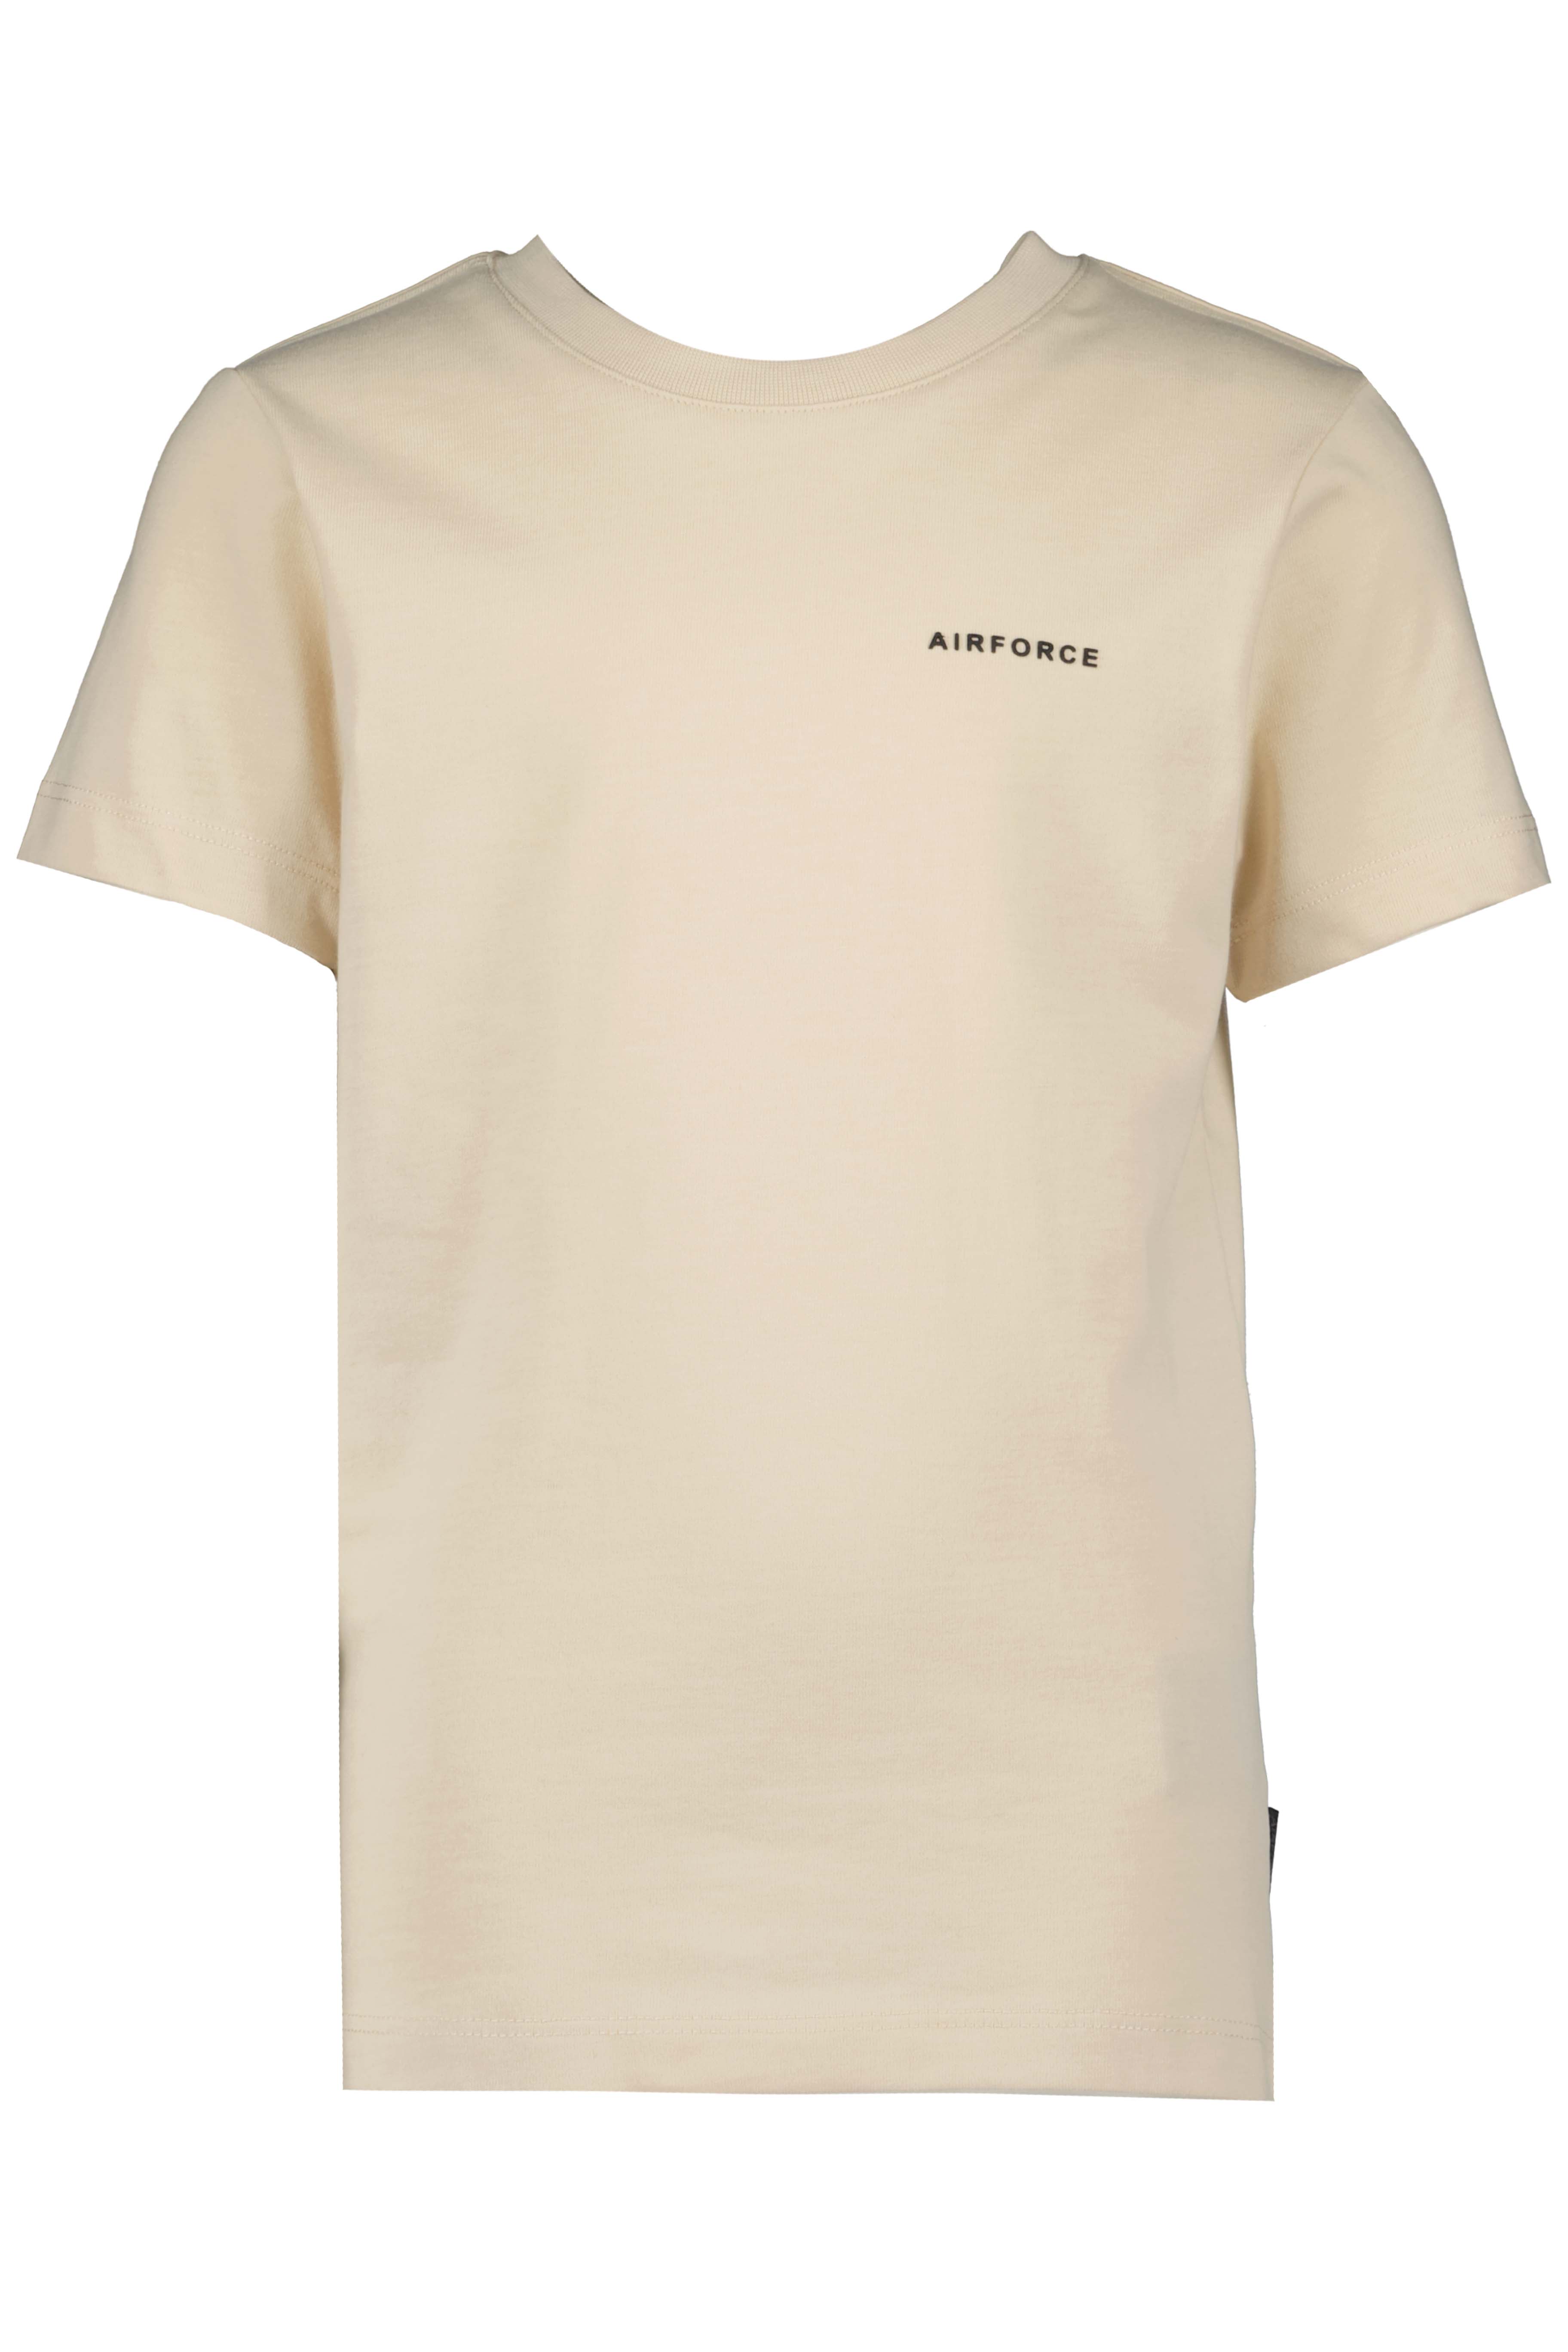 Airforce Airforce Basic T-Shirt